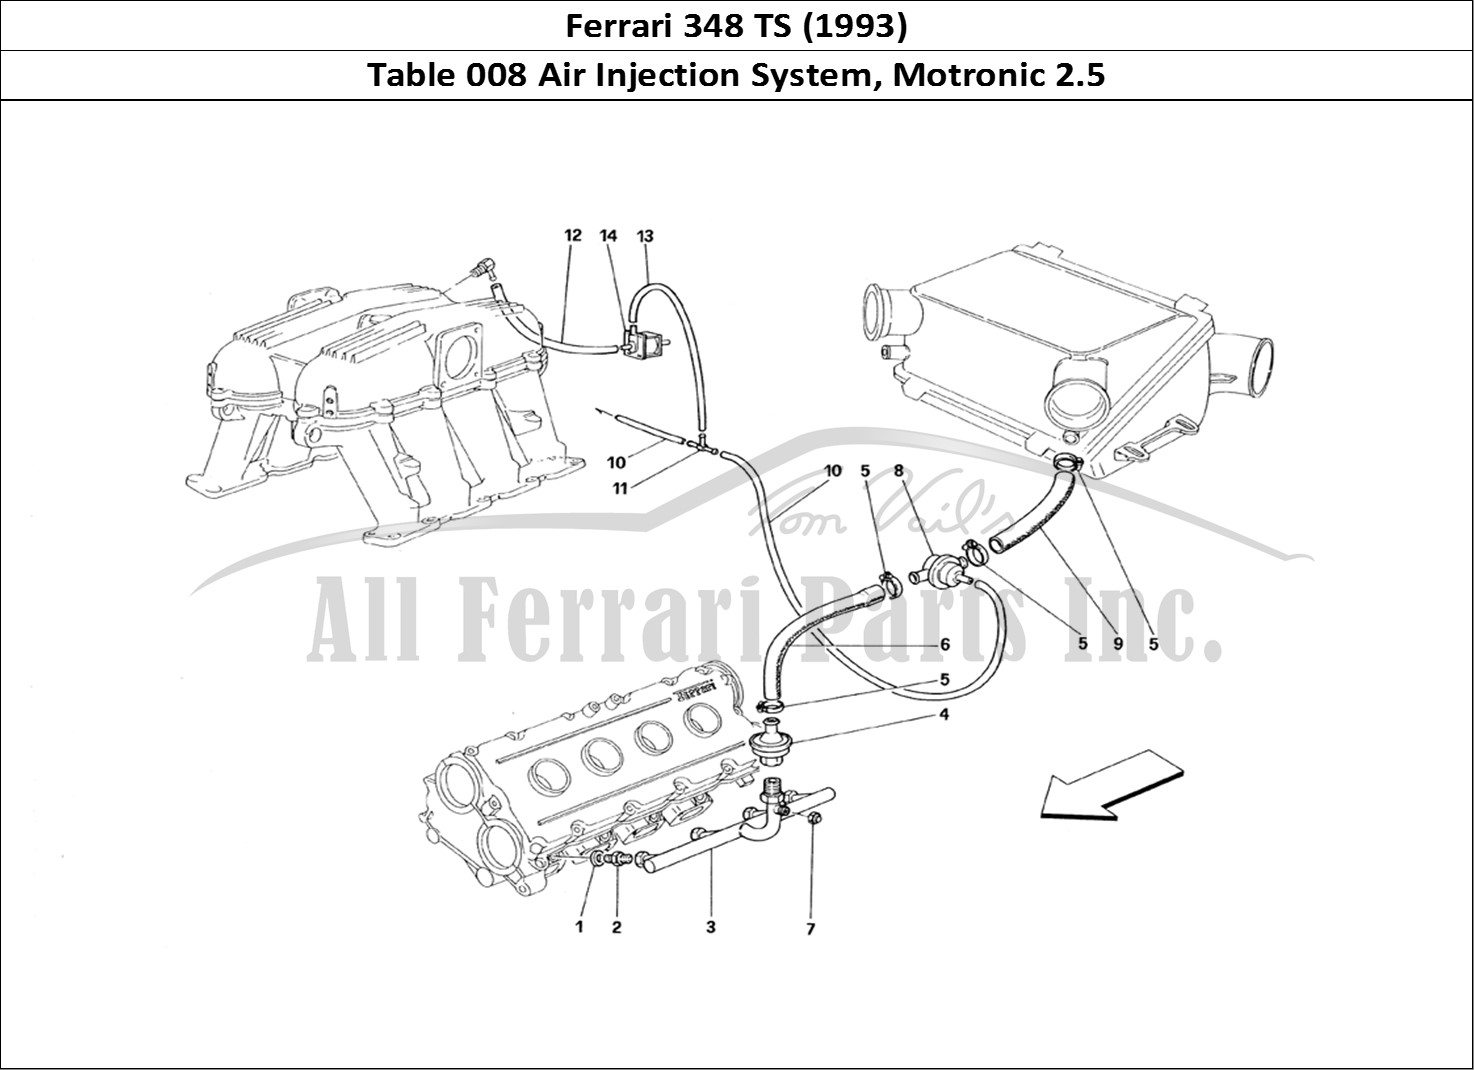 Ferrari Parts Ferrari 348 TB (1993) Page 008 Air Injection Device - Mo